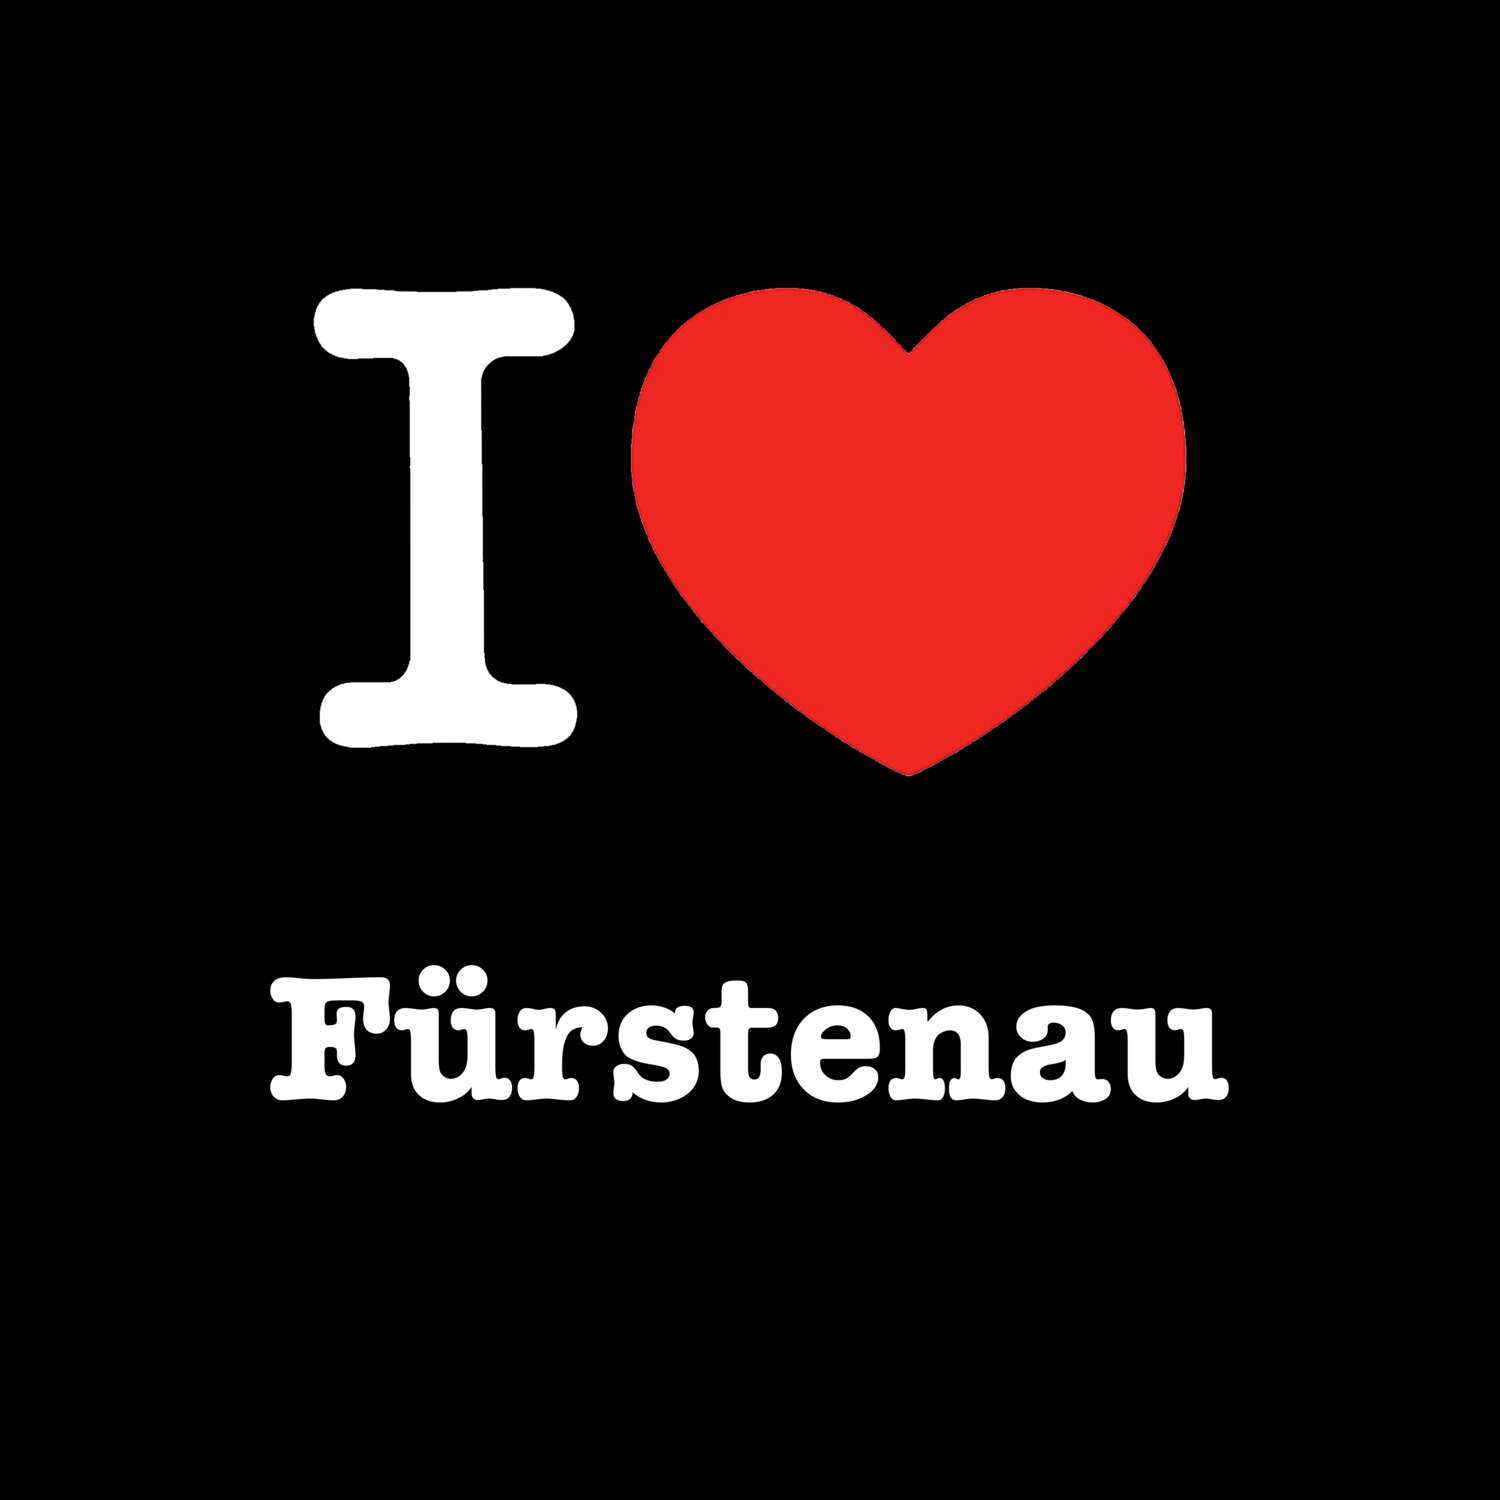 Fürstenau T-Shirt »I love«